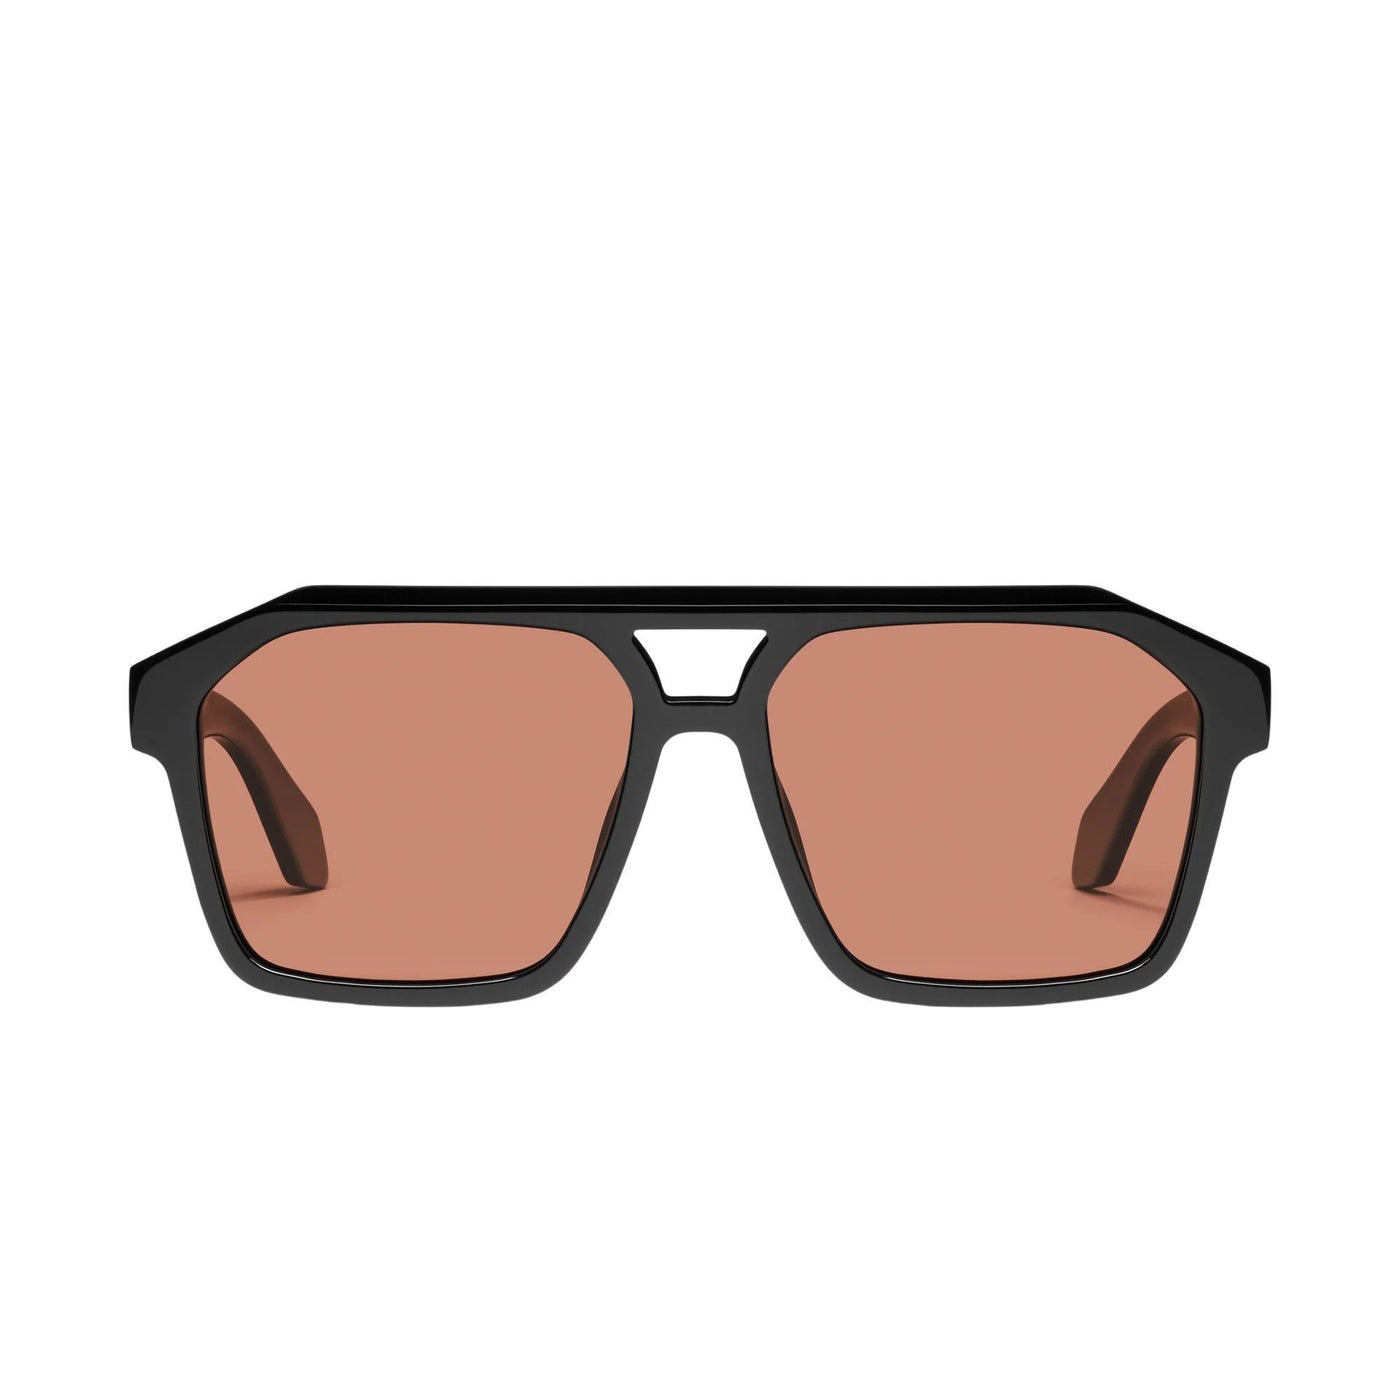 Quay Women's Soundcheck Modern Aviator Sunglasses (Black Frame/Apricot Polarized Lens) - Front View